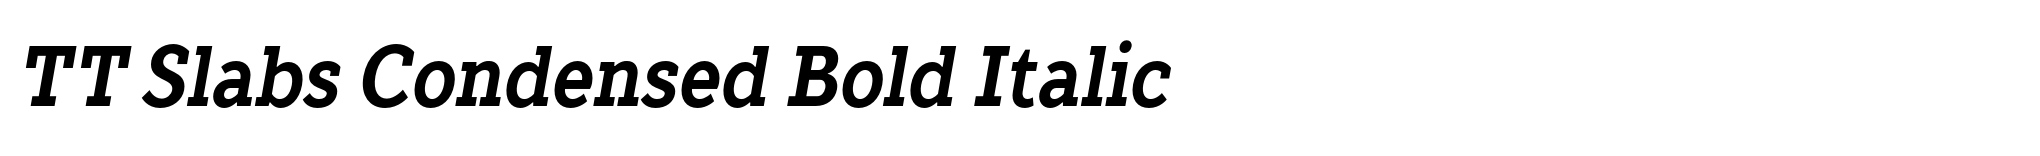 TT Slabs Condensed Bold Italic image